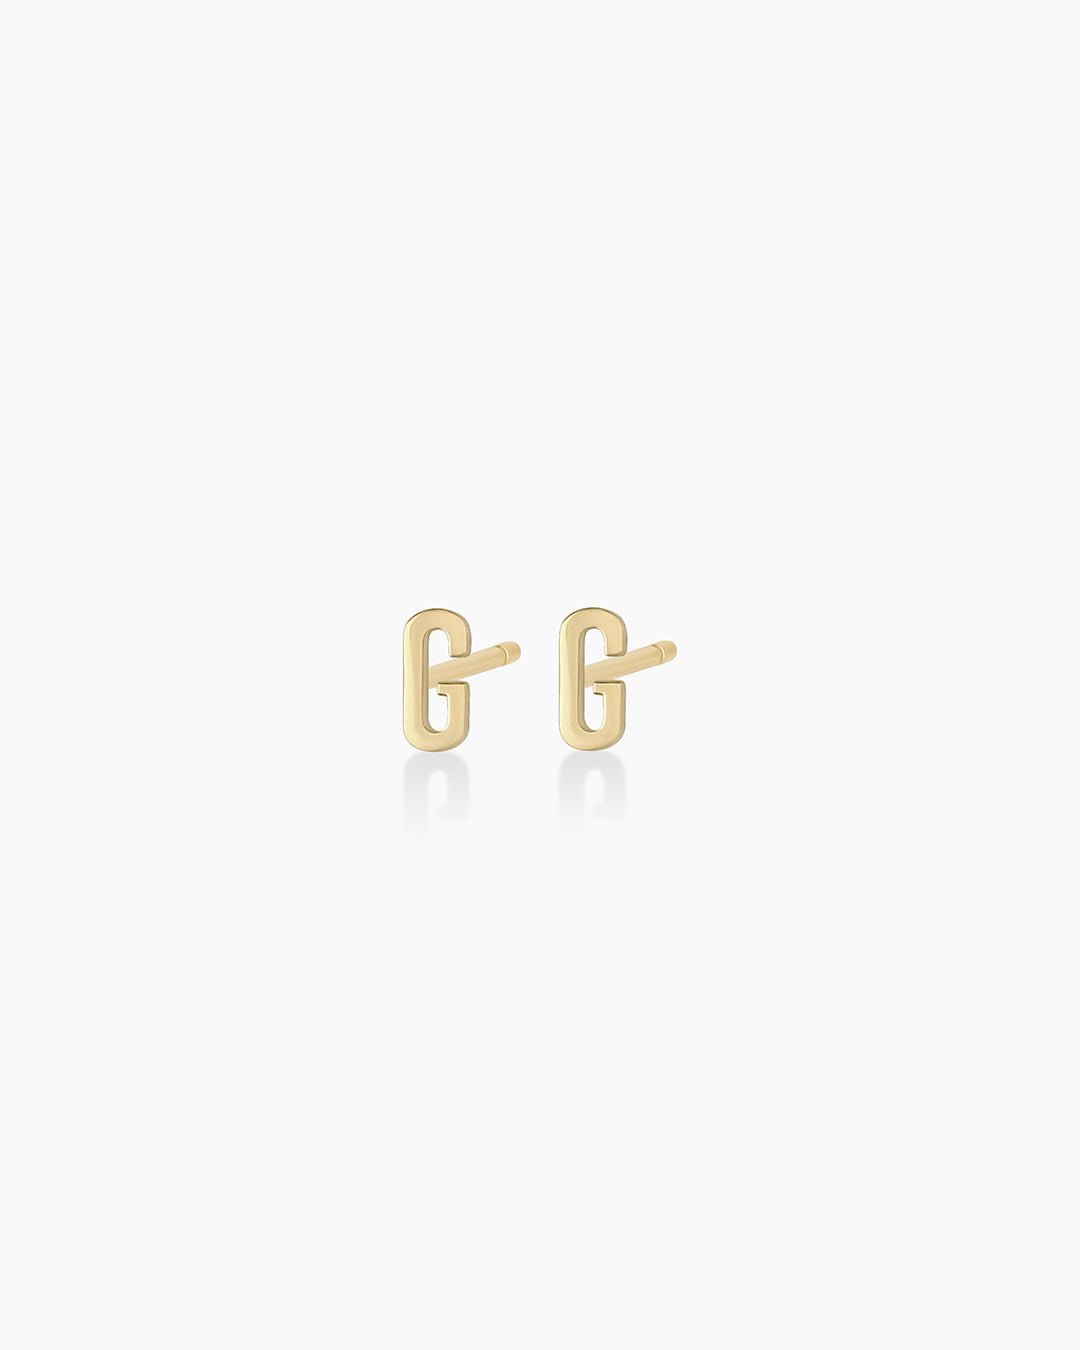 Alphabet earring stud || option::14k Solid Gold, G, Pair